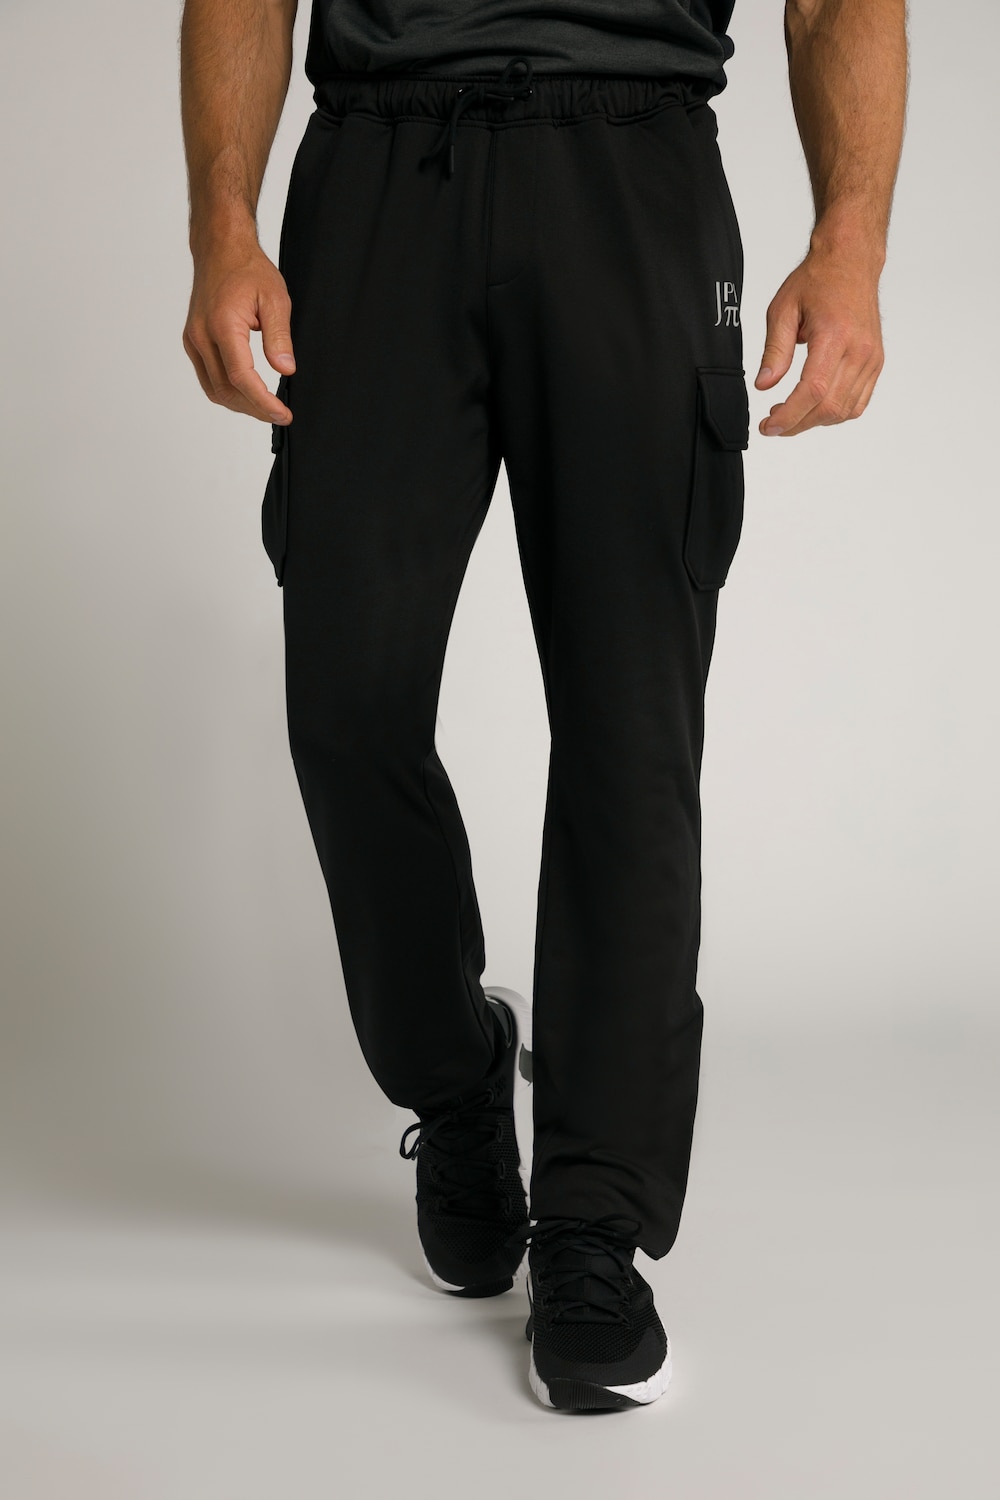 grandes tailles pantalon cargo technique jay-pi outdoor, femmes, noir, taille: 4xl, polyester, jay-pi